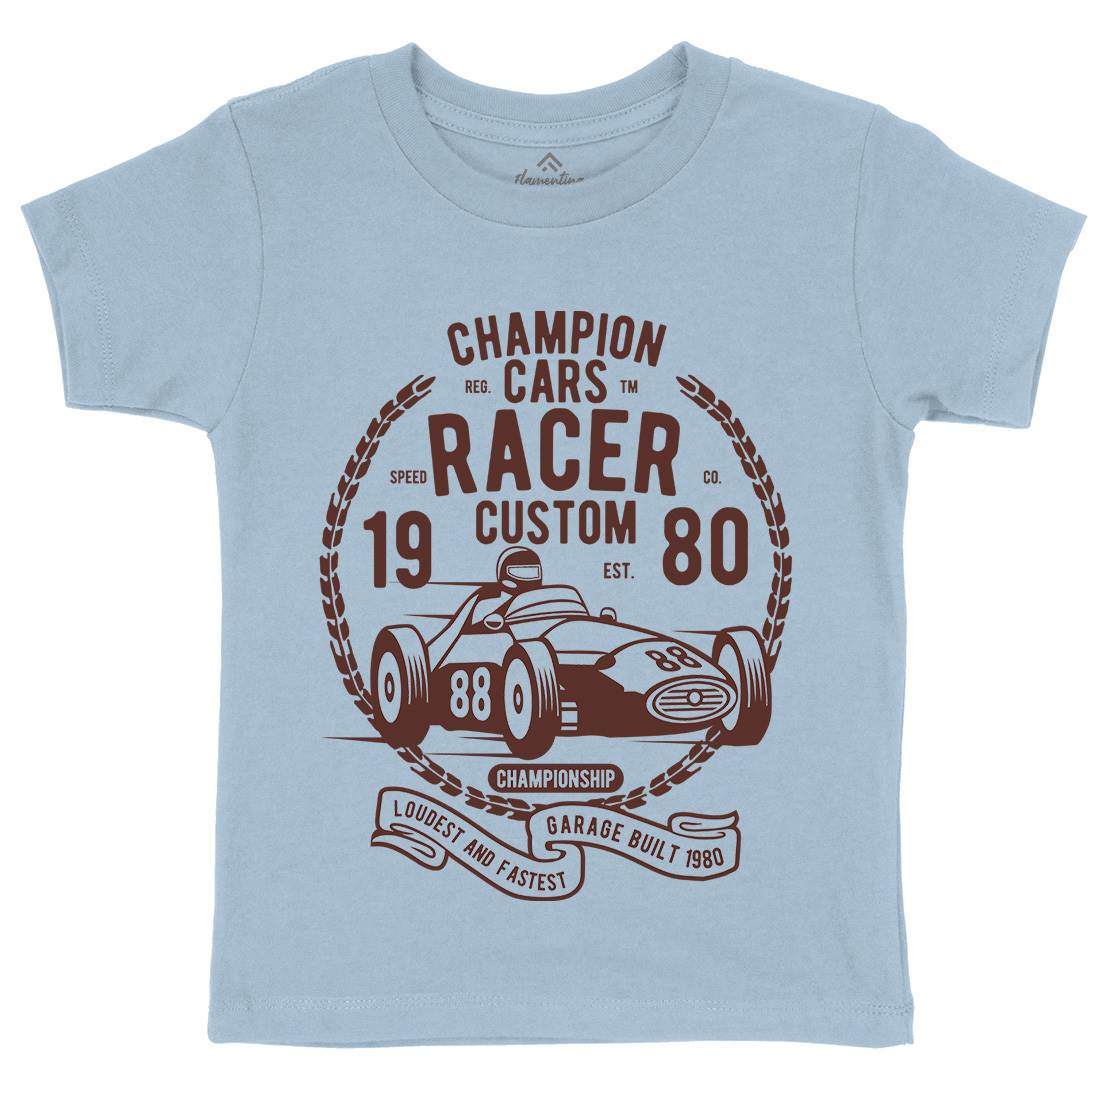 Champion Cars Racer Kids Crew Neck T-Shirt Cars B395